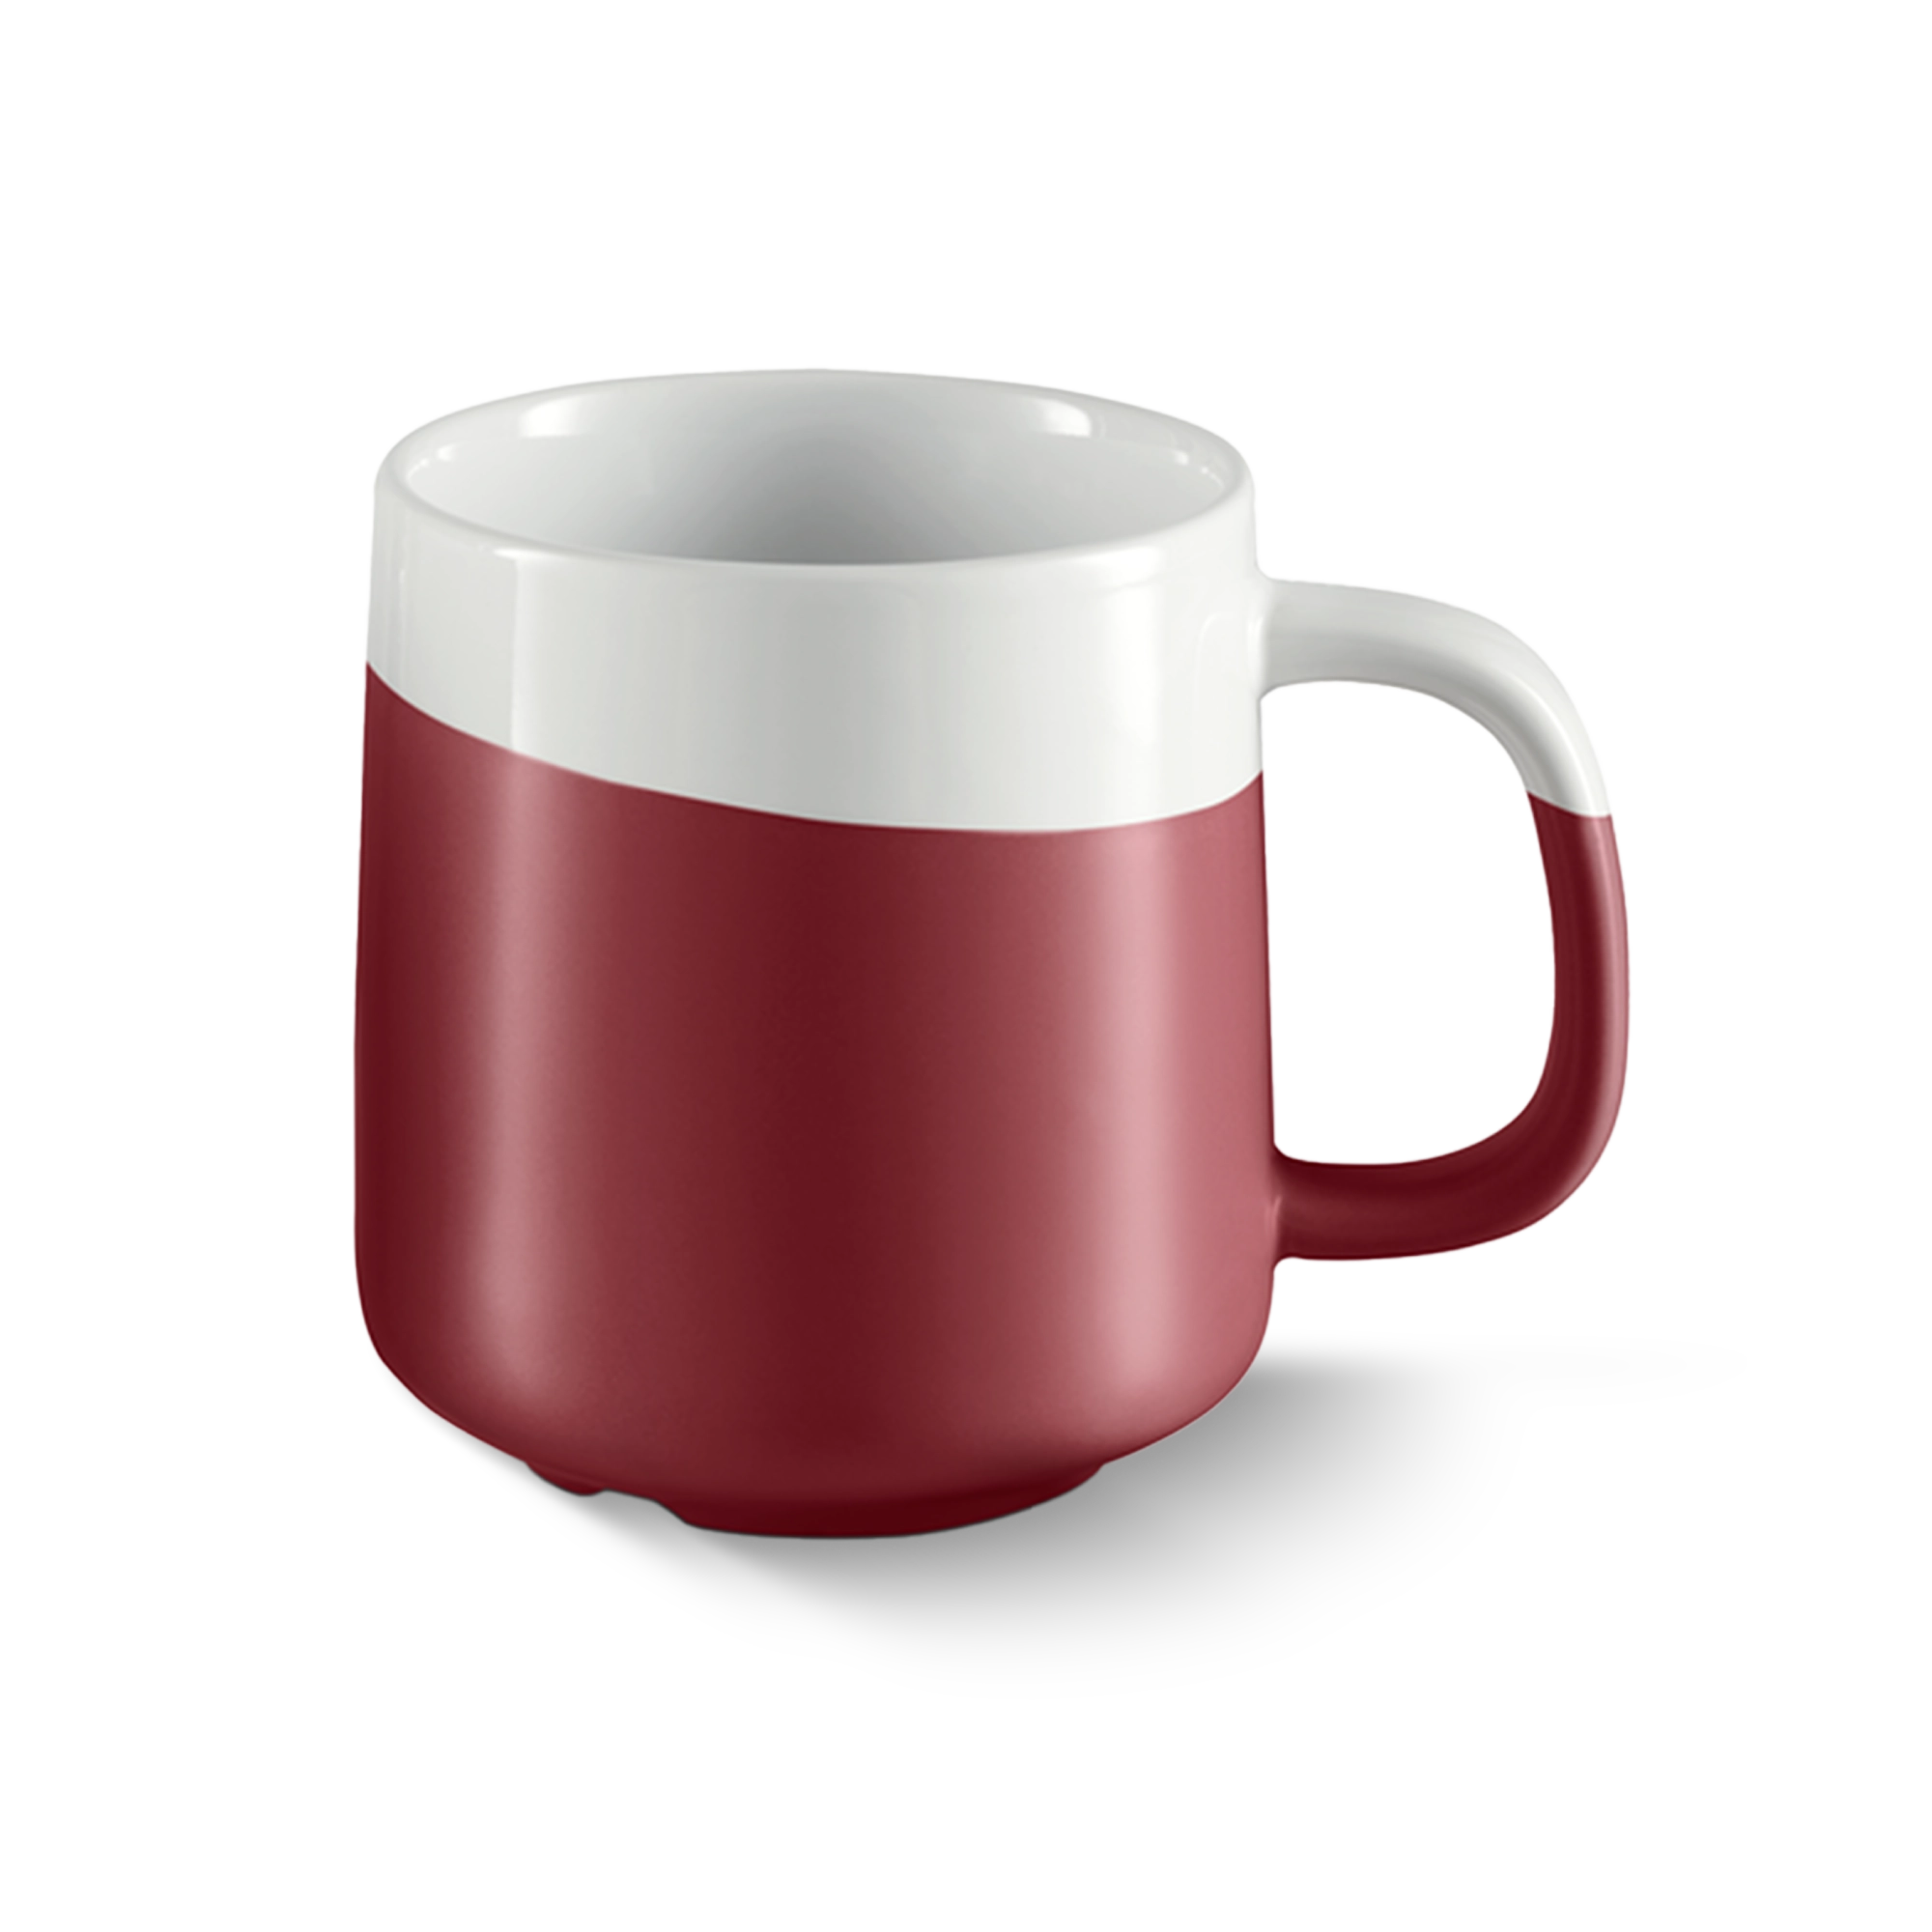 Ceramic Coffee Mugs - Set of 2